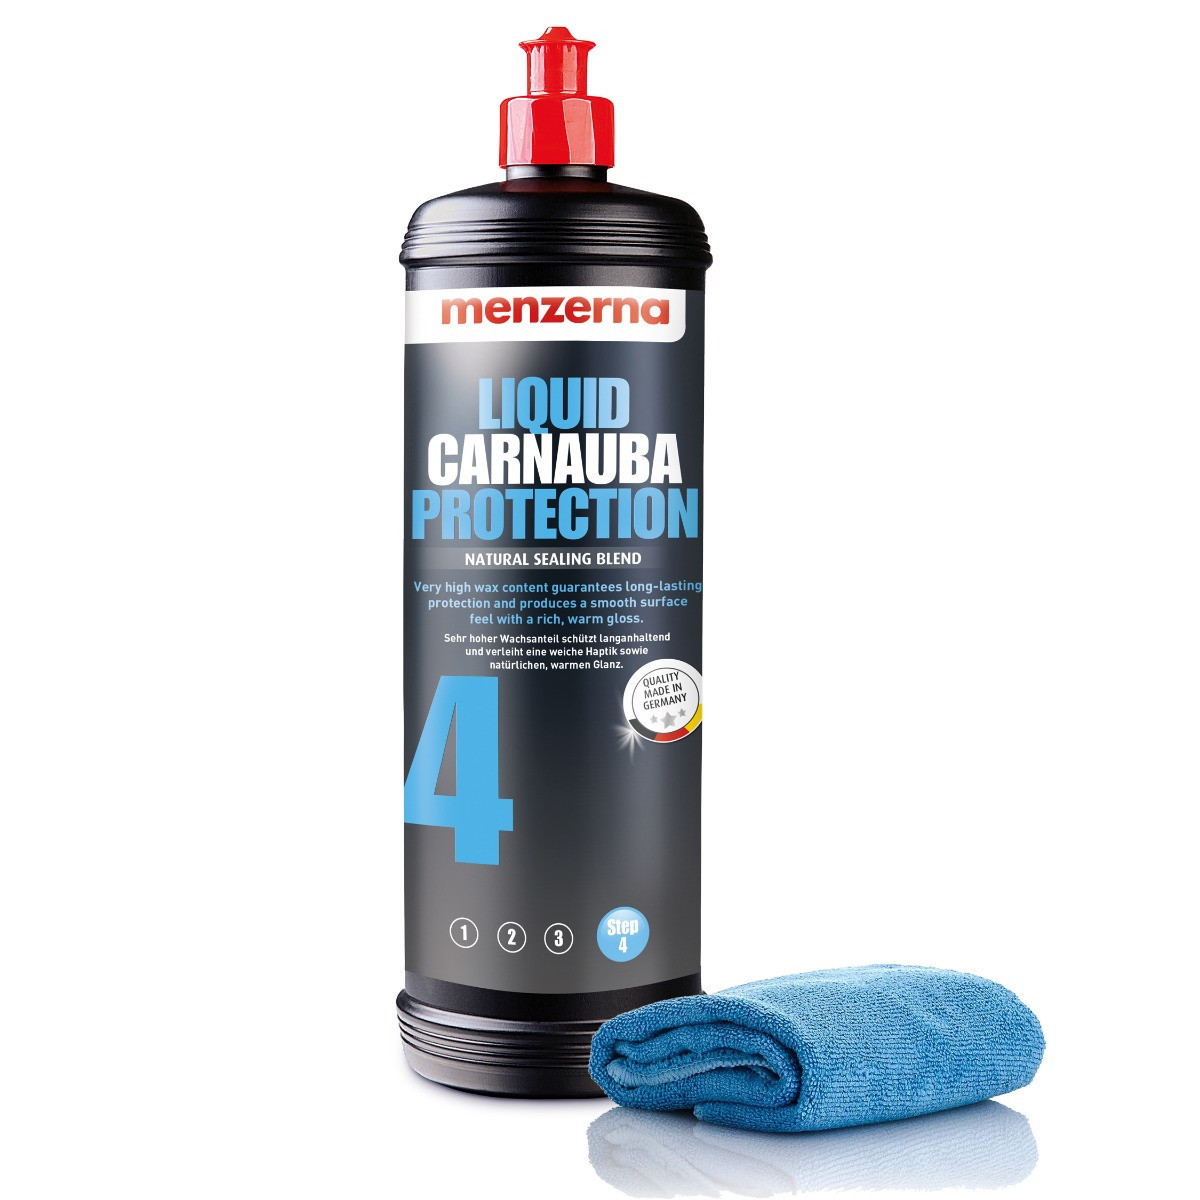 Menzerna liquid carnauba protection 1l - naturalny wosk carnauba